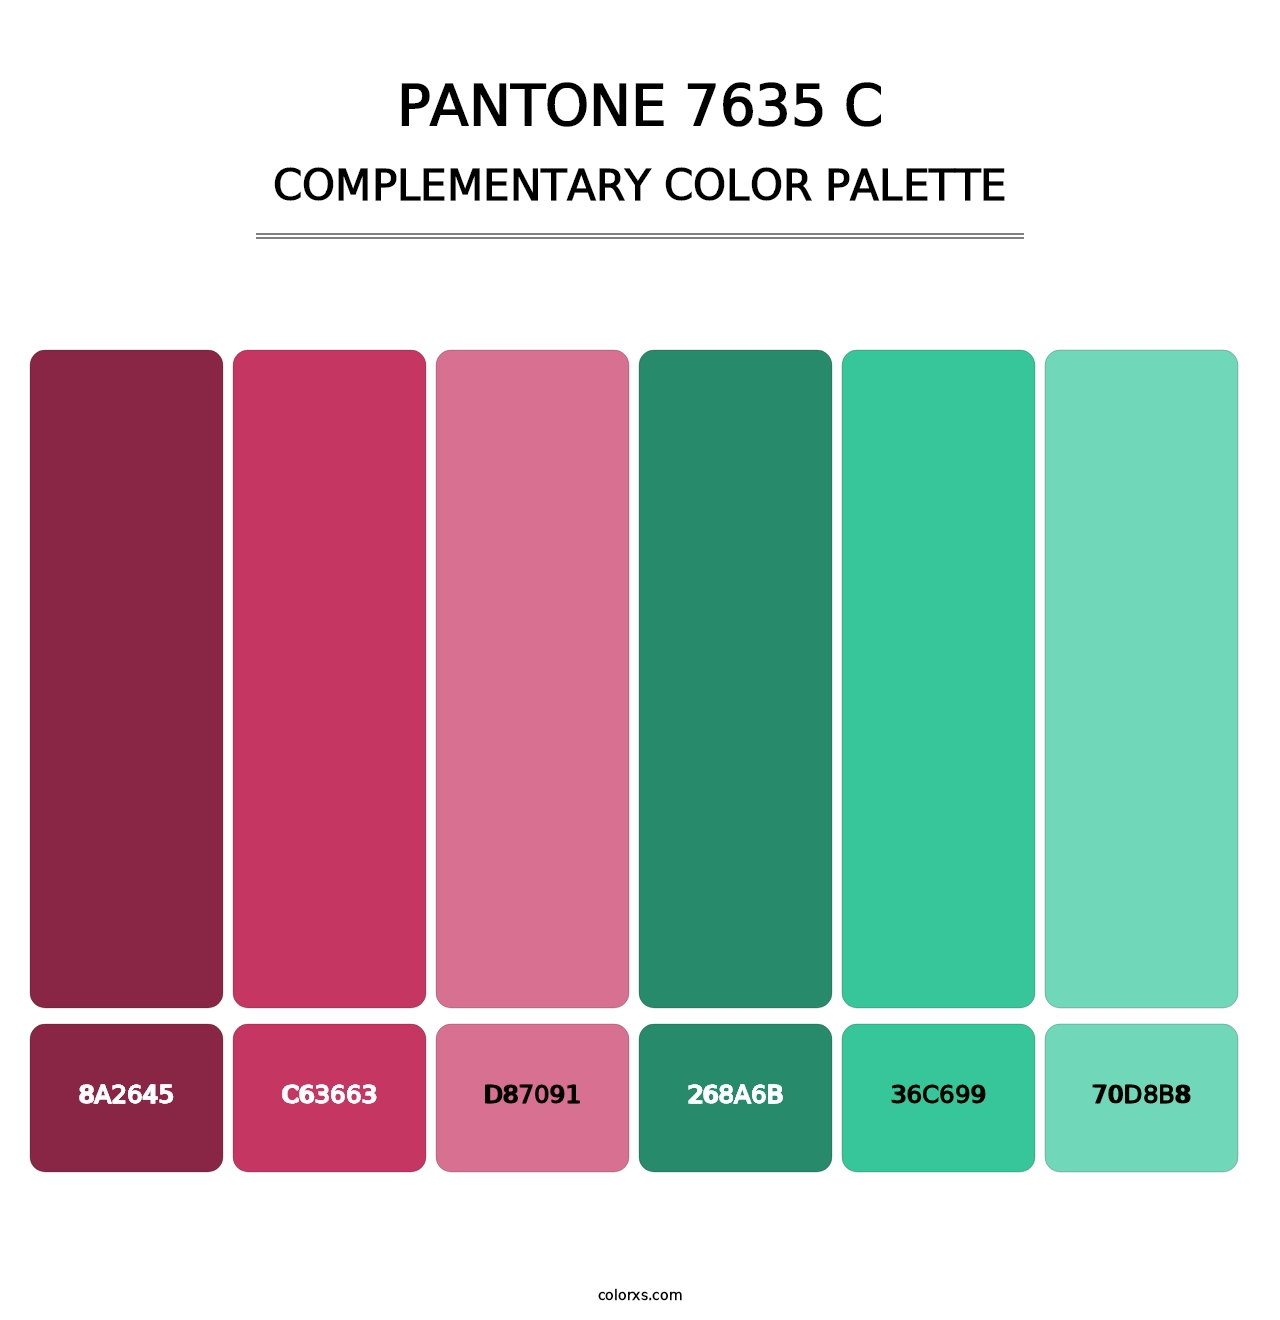 PANTONE 7635 C - Complementary Color Palette